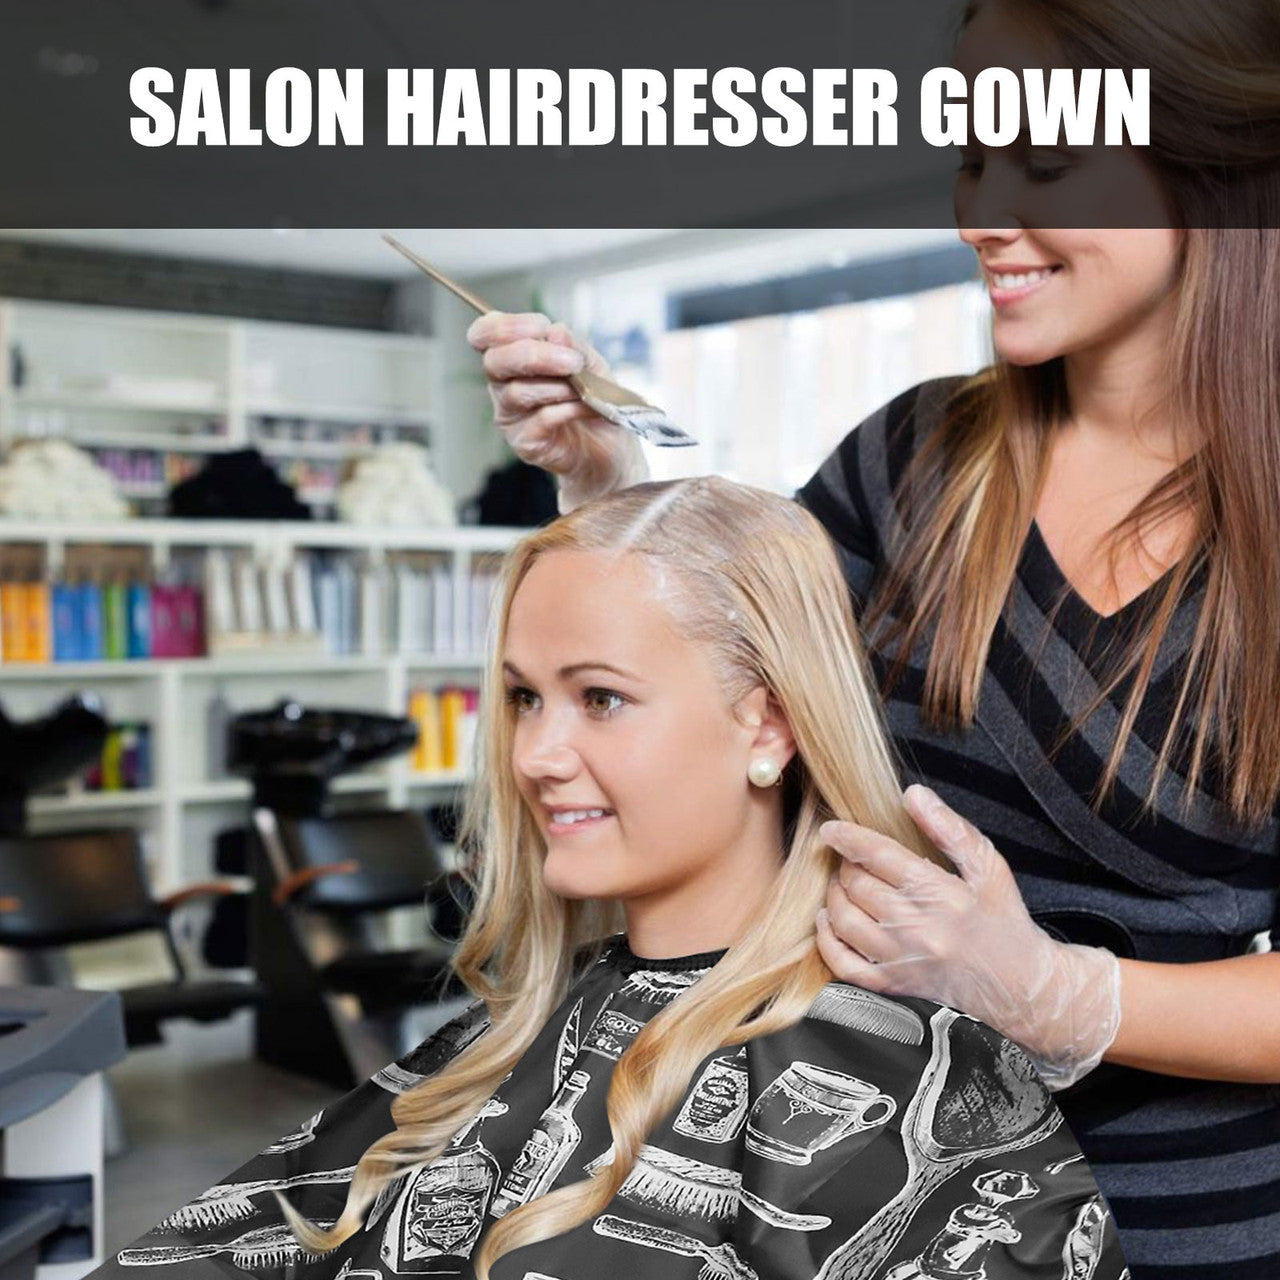 Professional Cutting Cover Barbers Cape, Haircut Salon Cape Hairdressing Hairdresser Gown Salon Apron Barber Cloth Hair Cutting Snap Closure (Black)